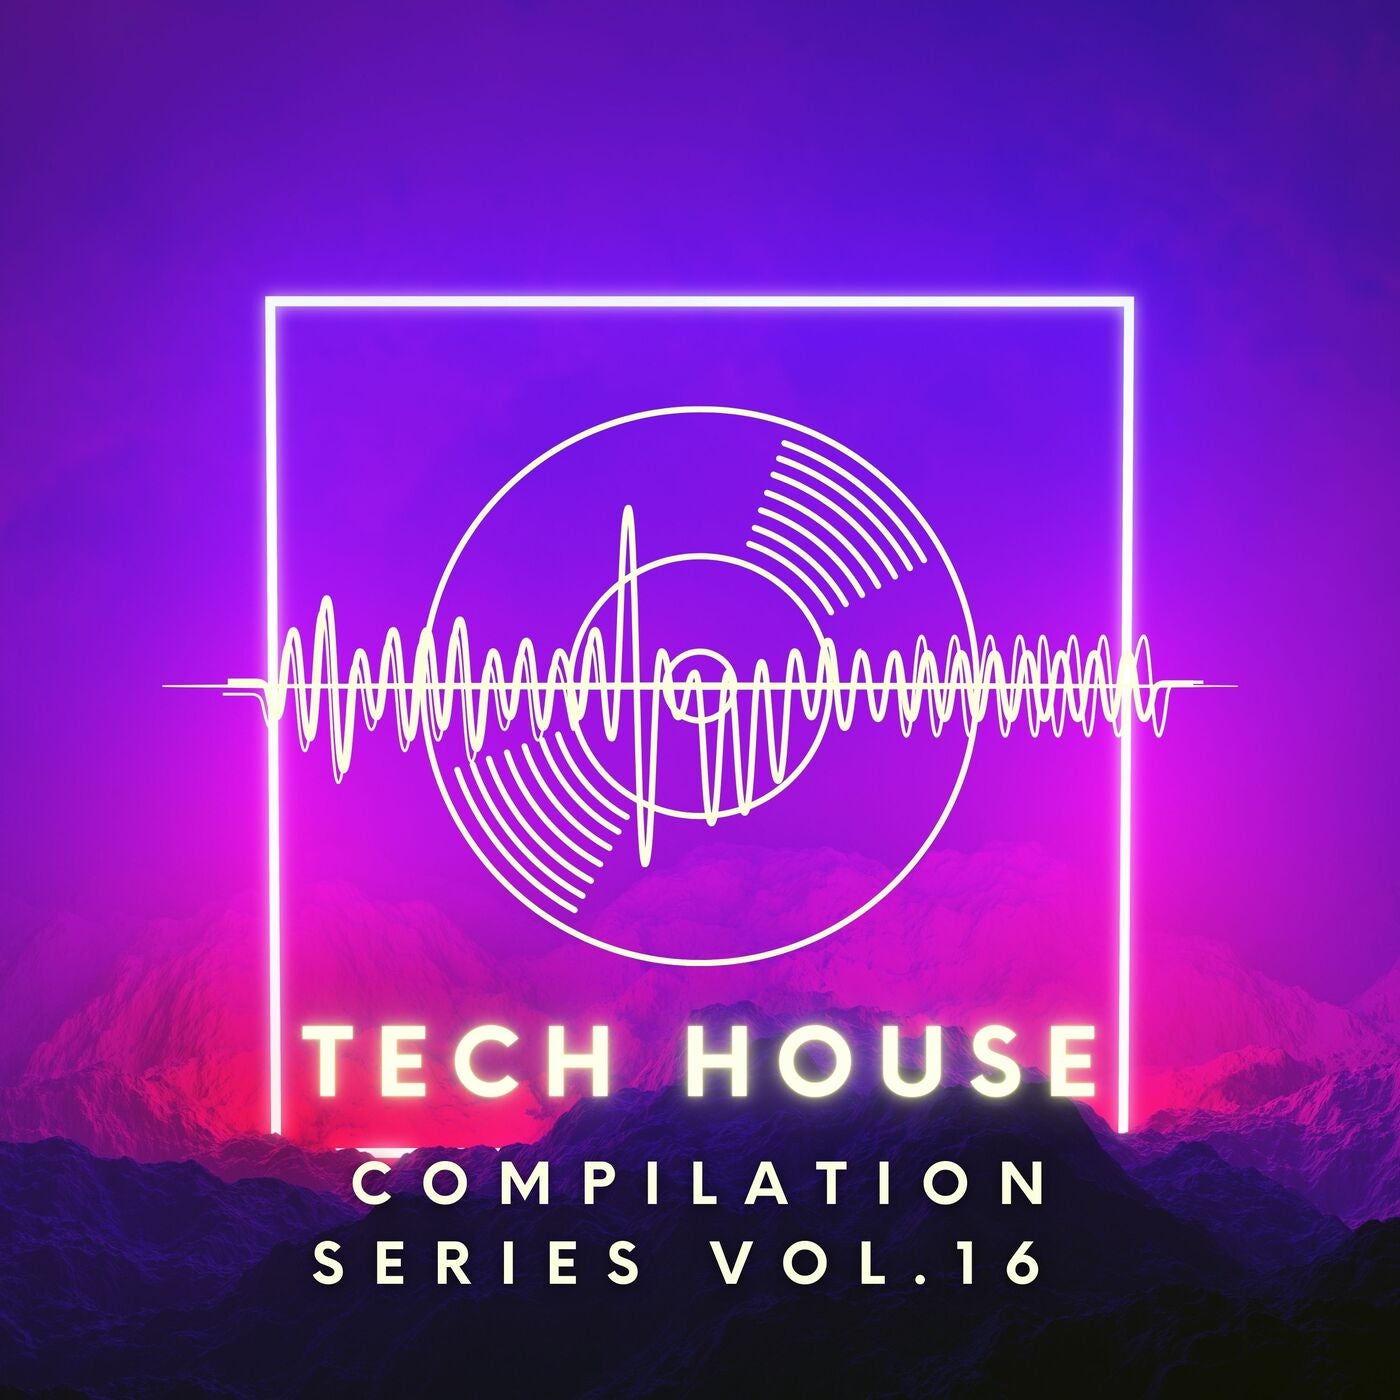 Tech House Compilation Series Vol. 16